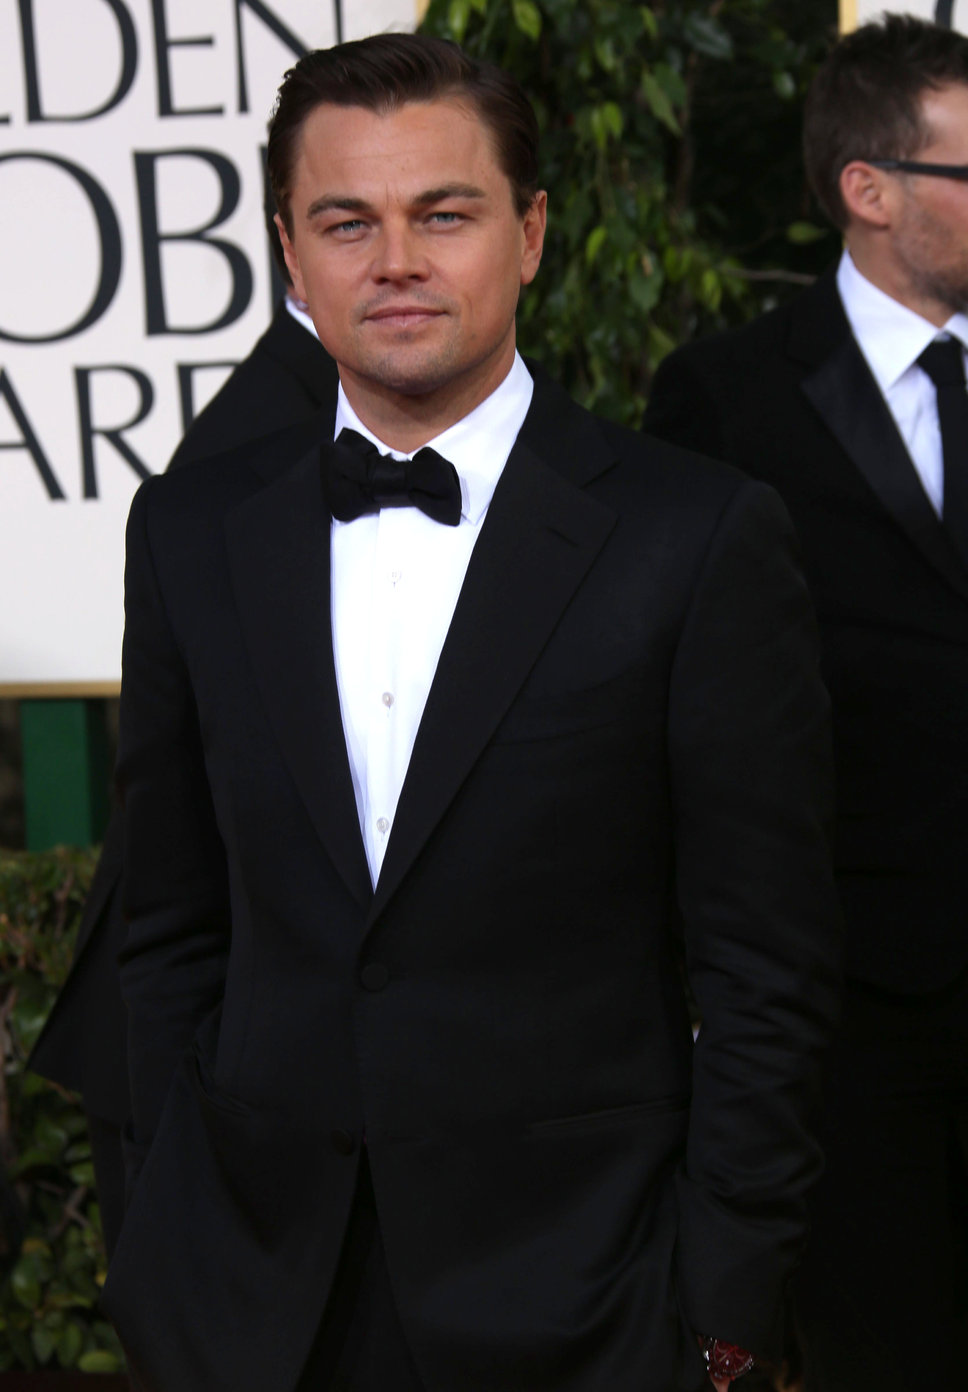 Leonardo-DiCaprio-black-tuxedo